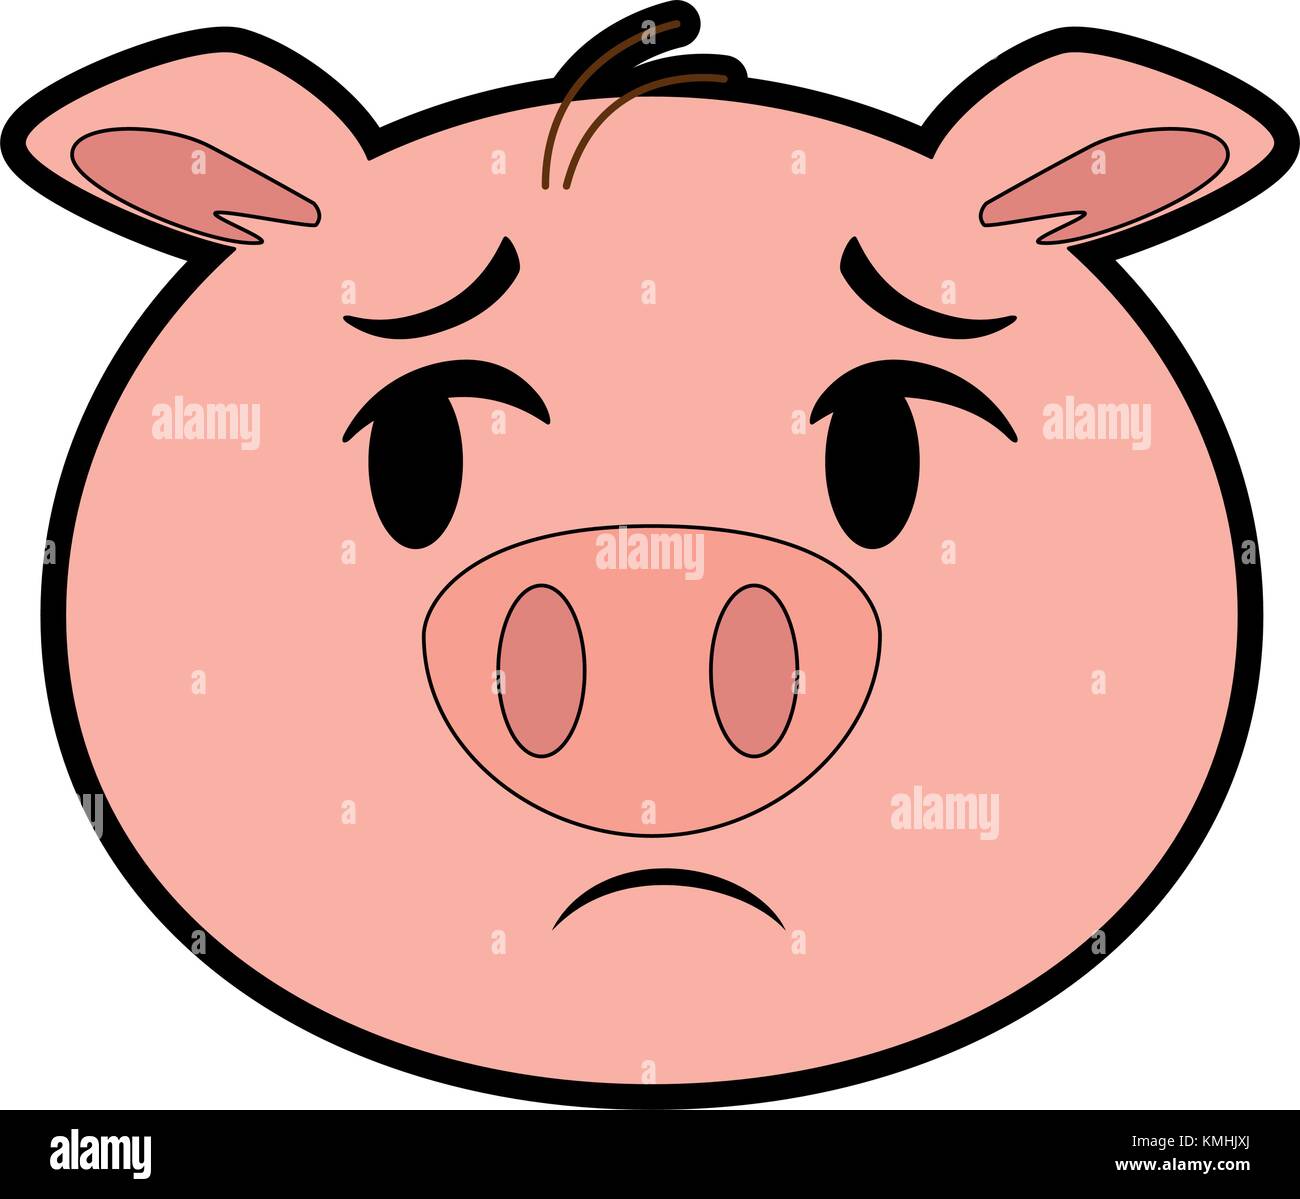 terrified pig emoji kawaii Stock Vector